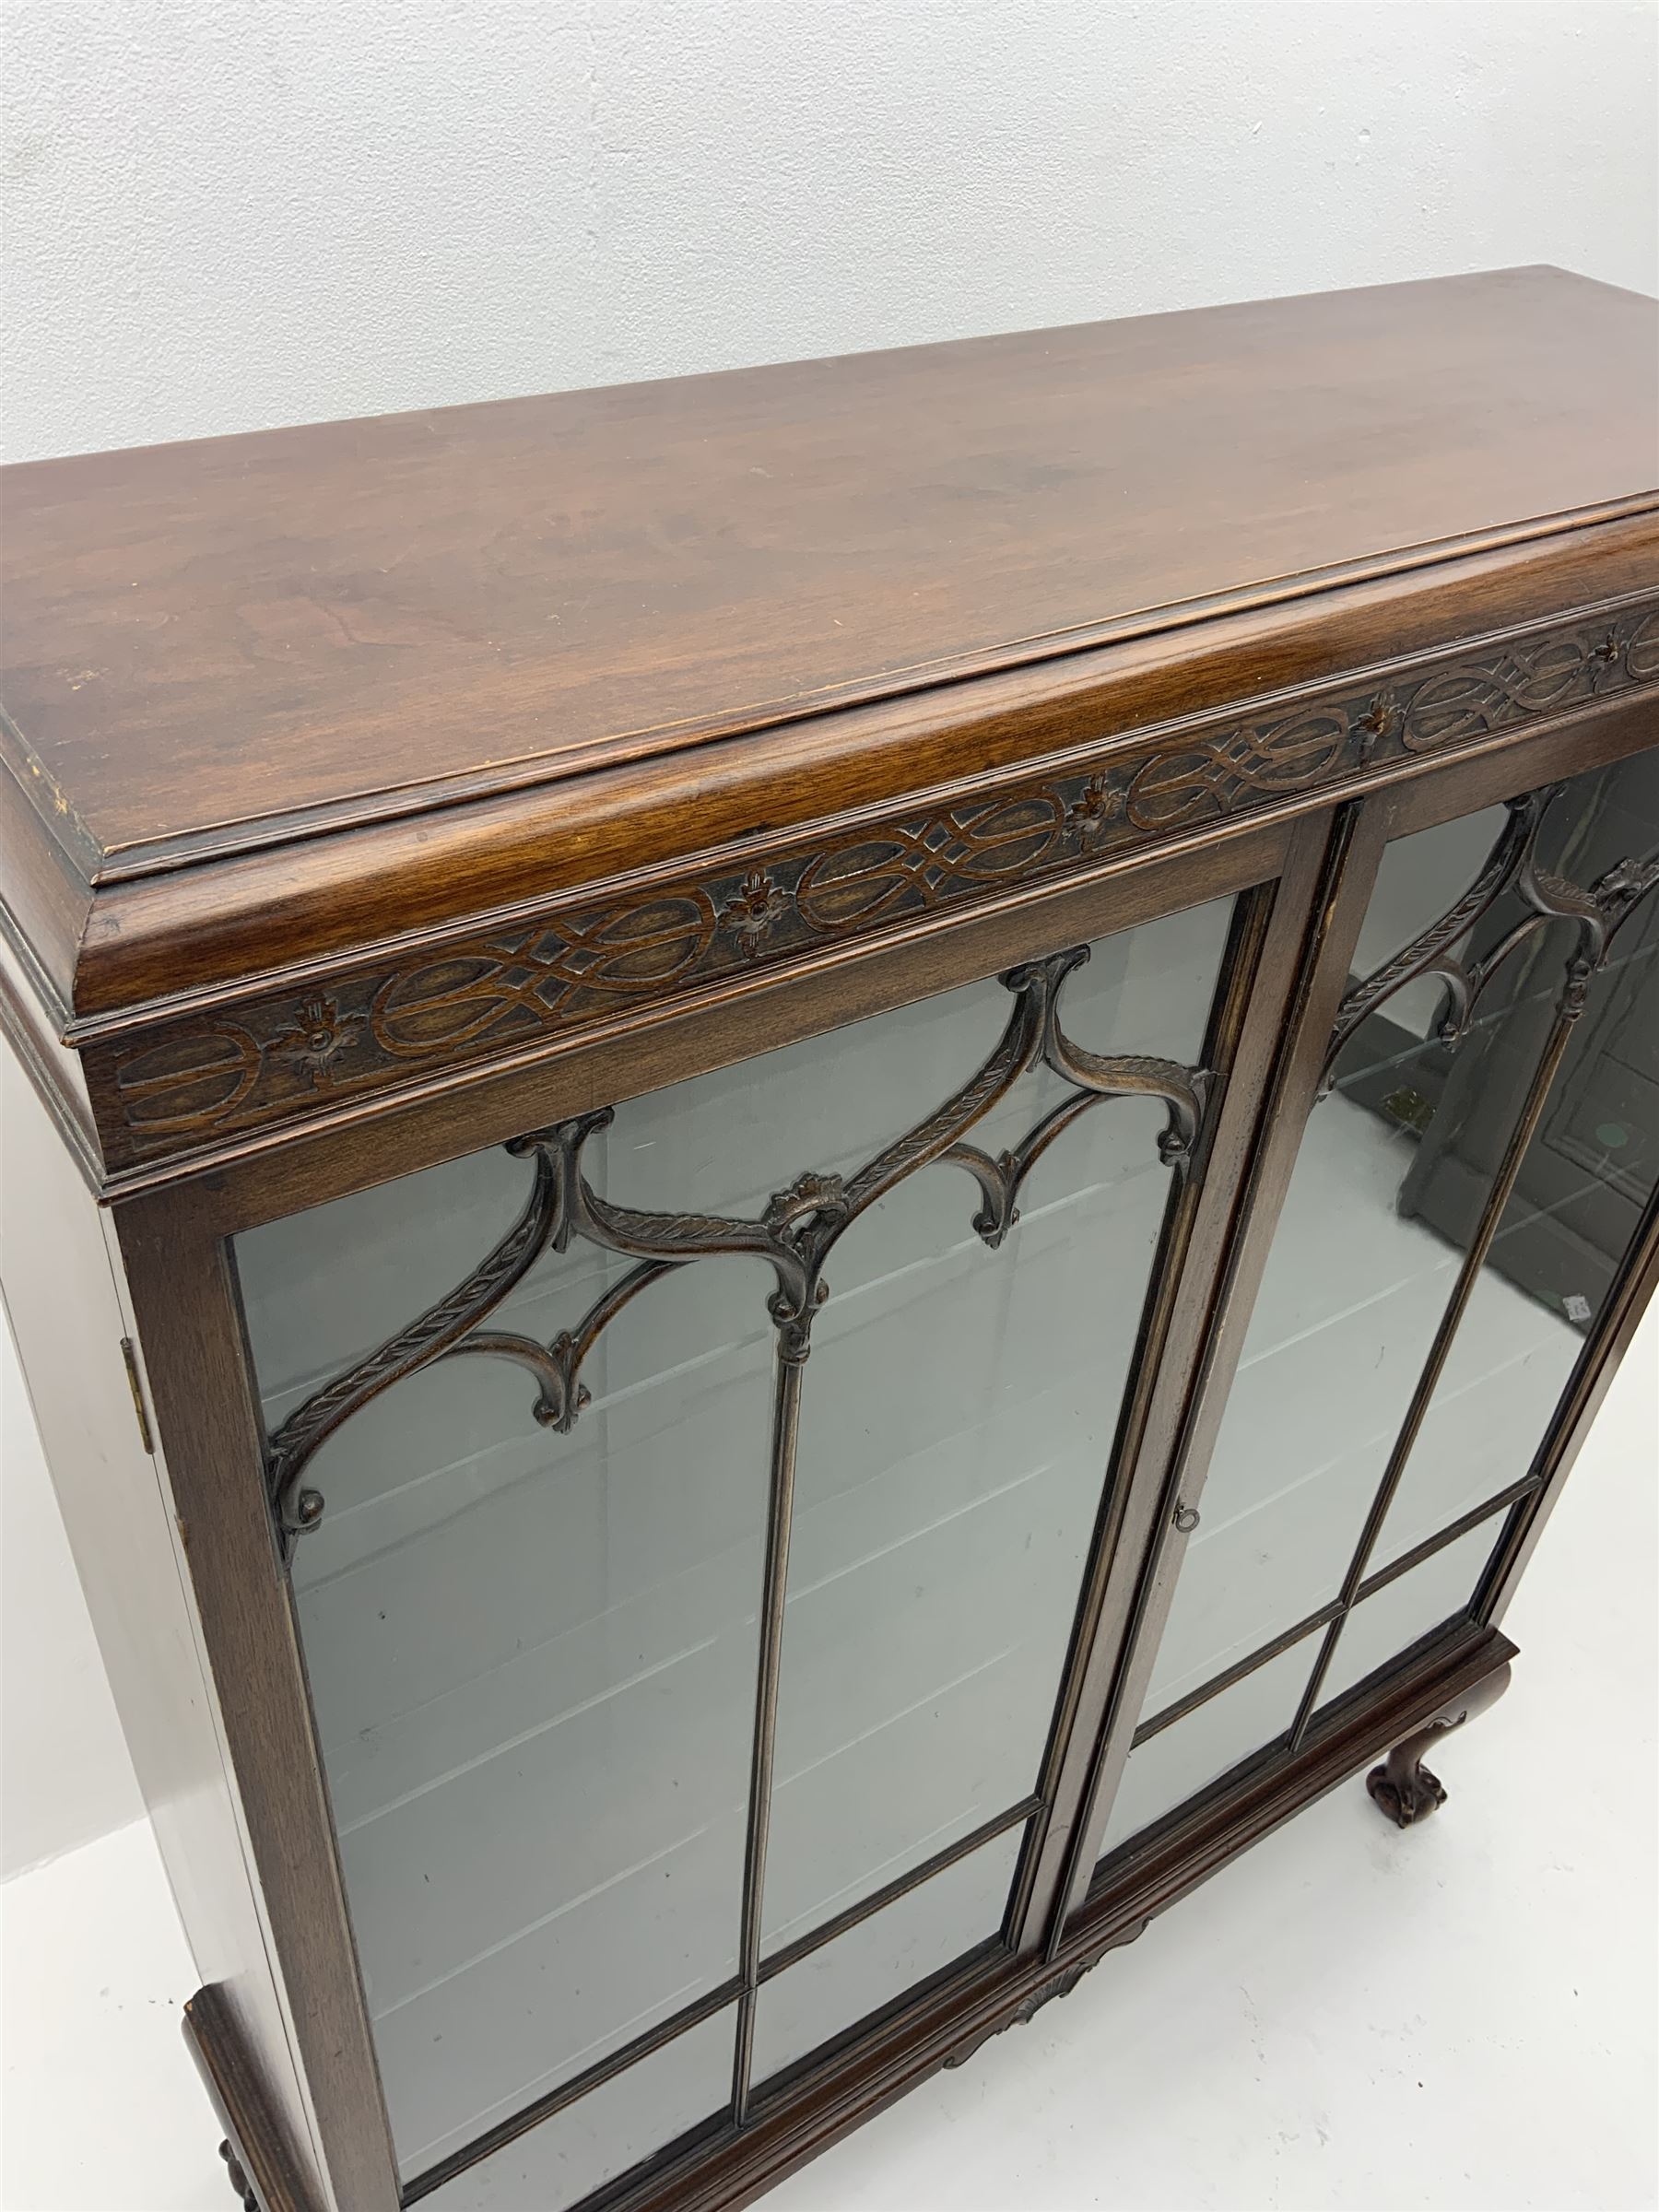 Early 20th century mahogany display cabinet - Image 2 of 2